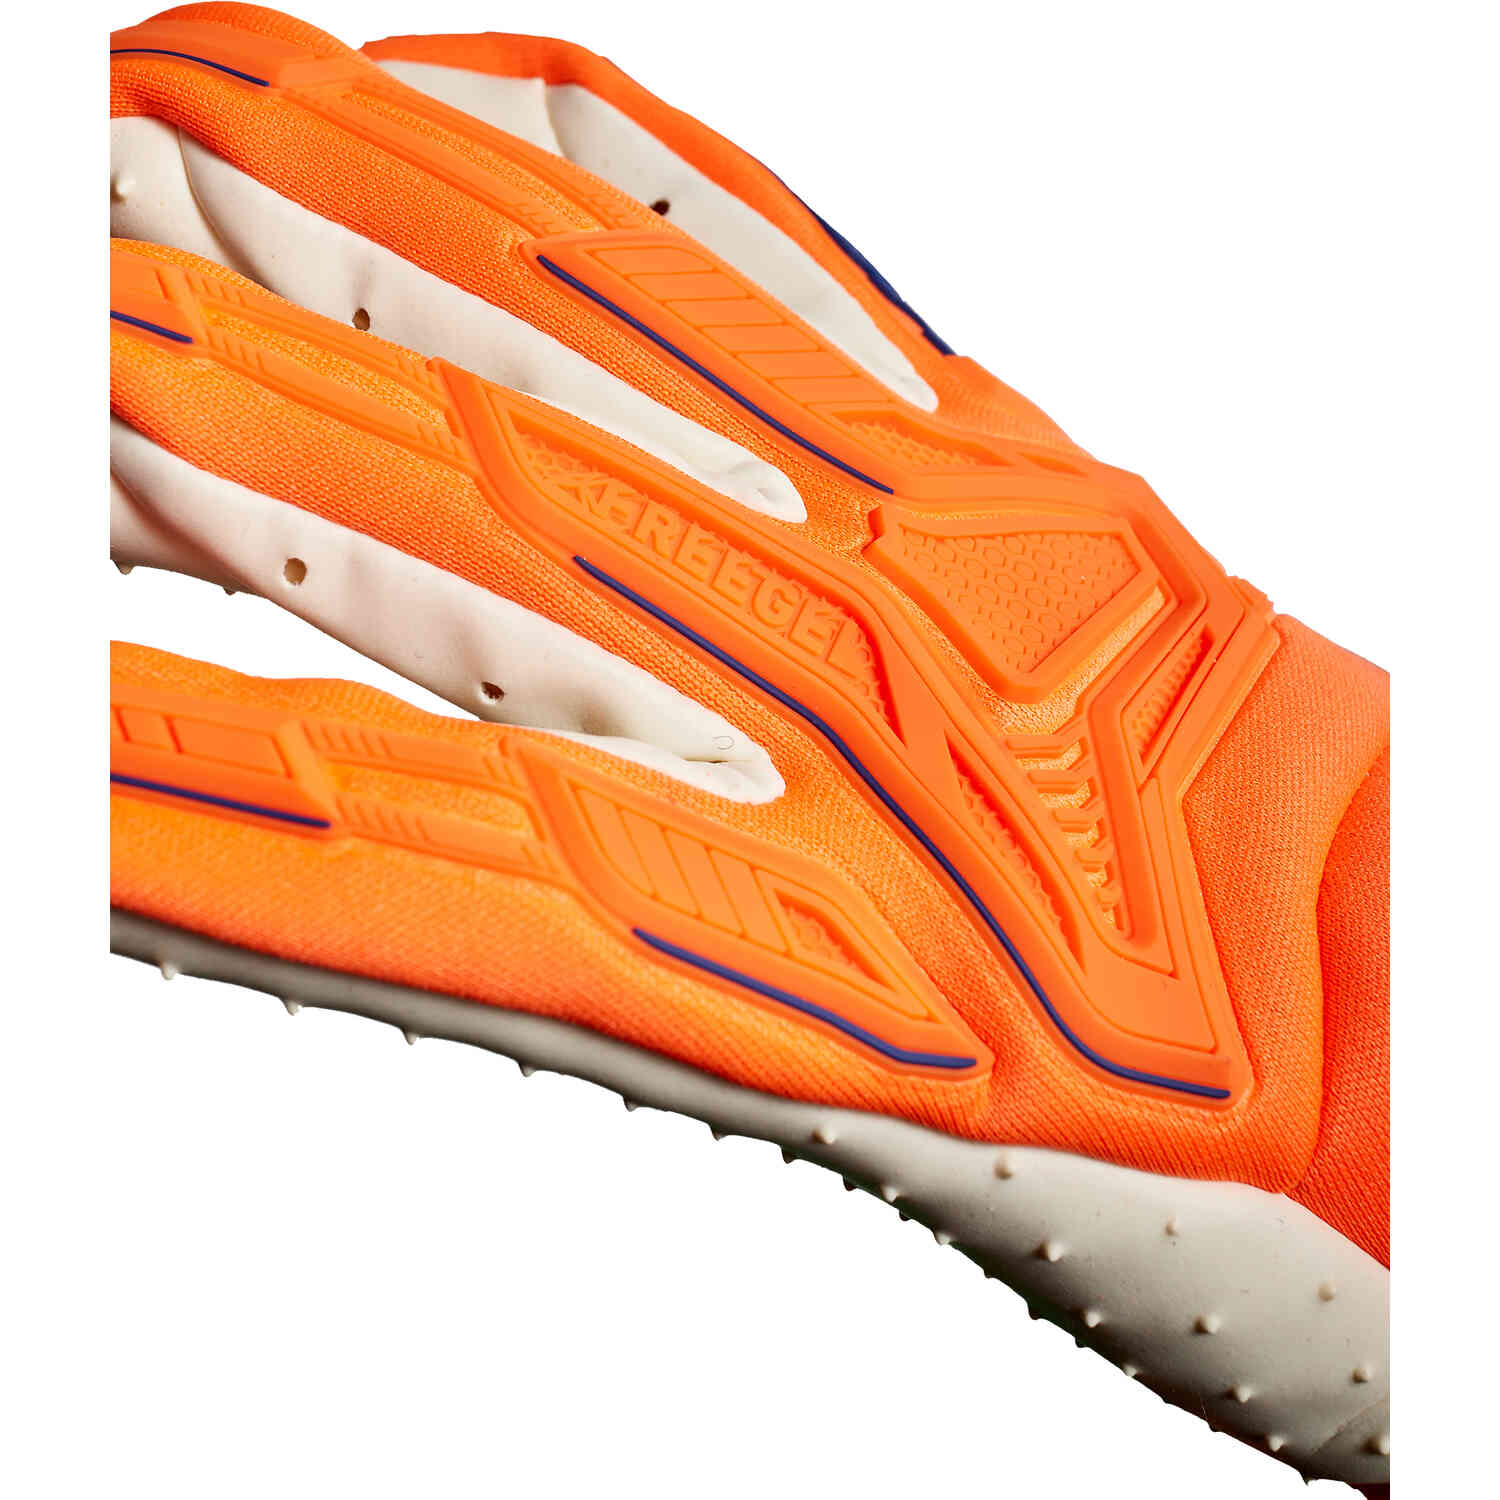 Nike Vapor Jet 3.0 Men's Receiver Gloves - Team Orange/Black